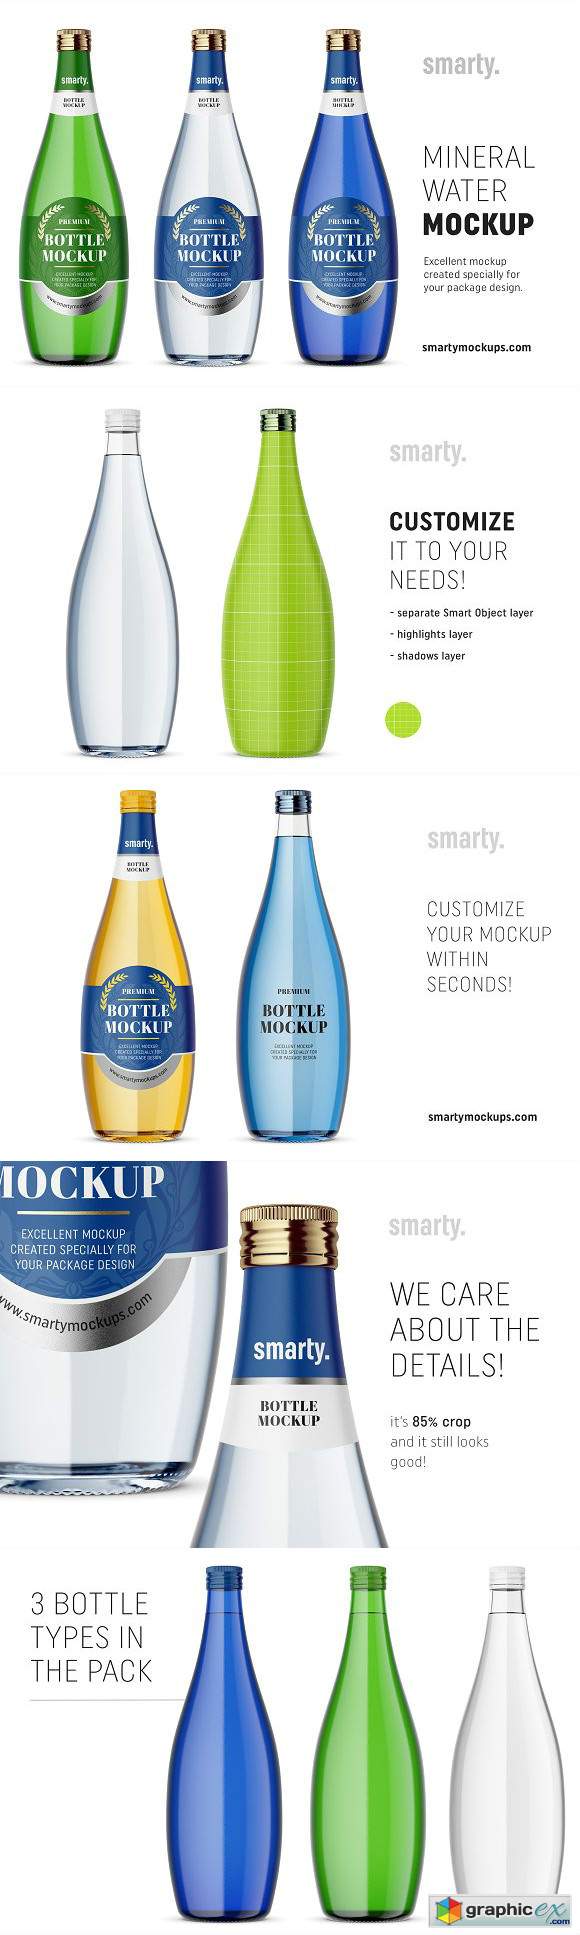 Glass mineral water bottle mockups